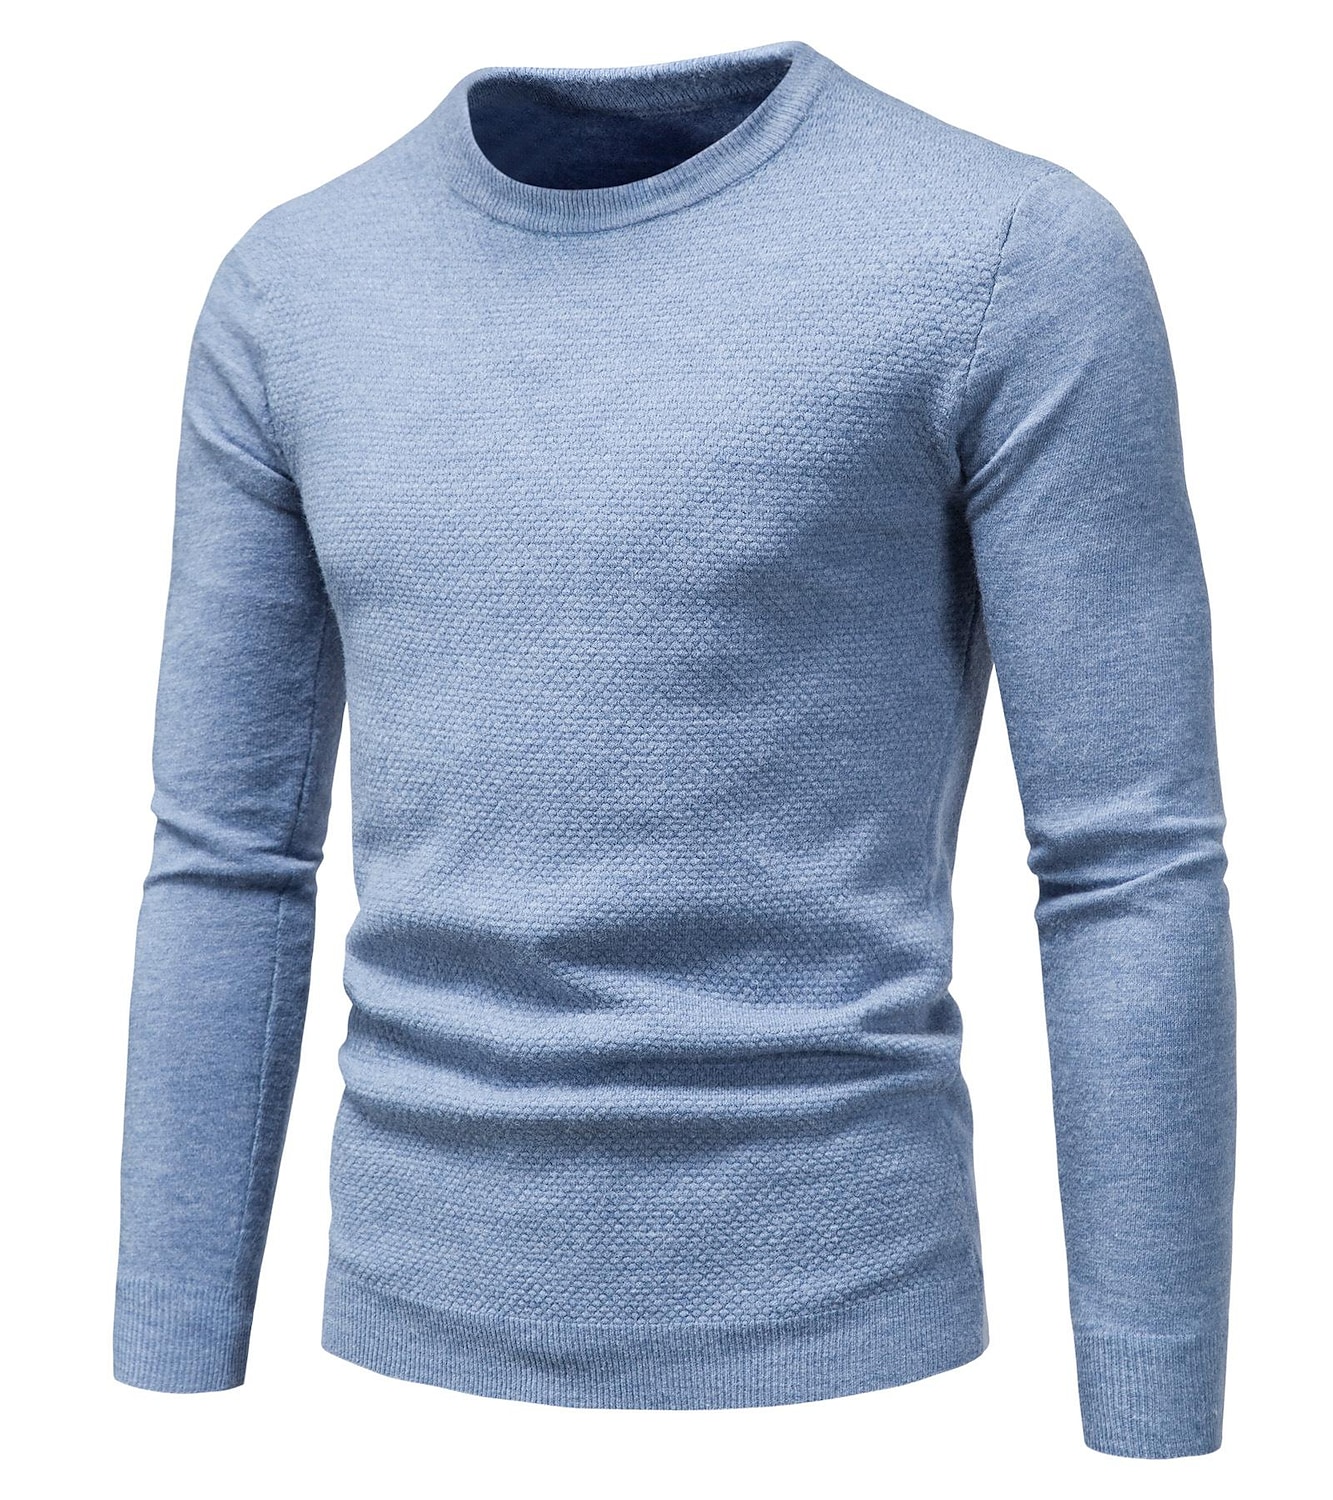 Rogoman Men's Crew Neck Solid Color Texture Pullover Sweater